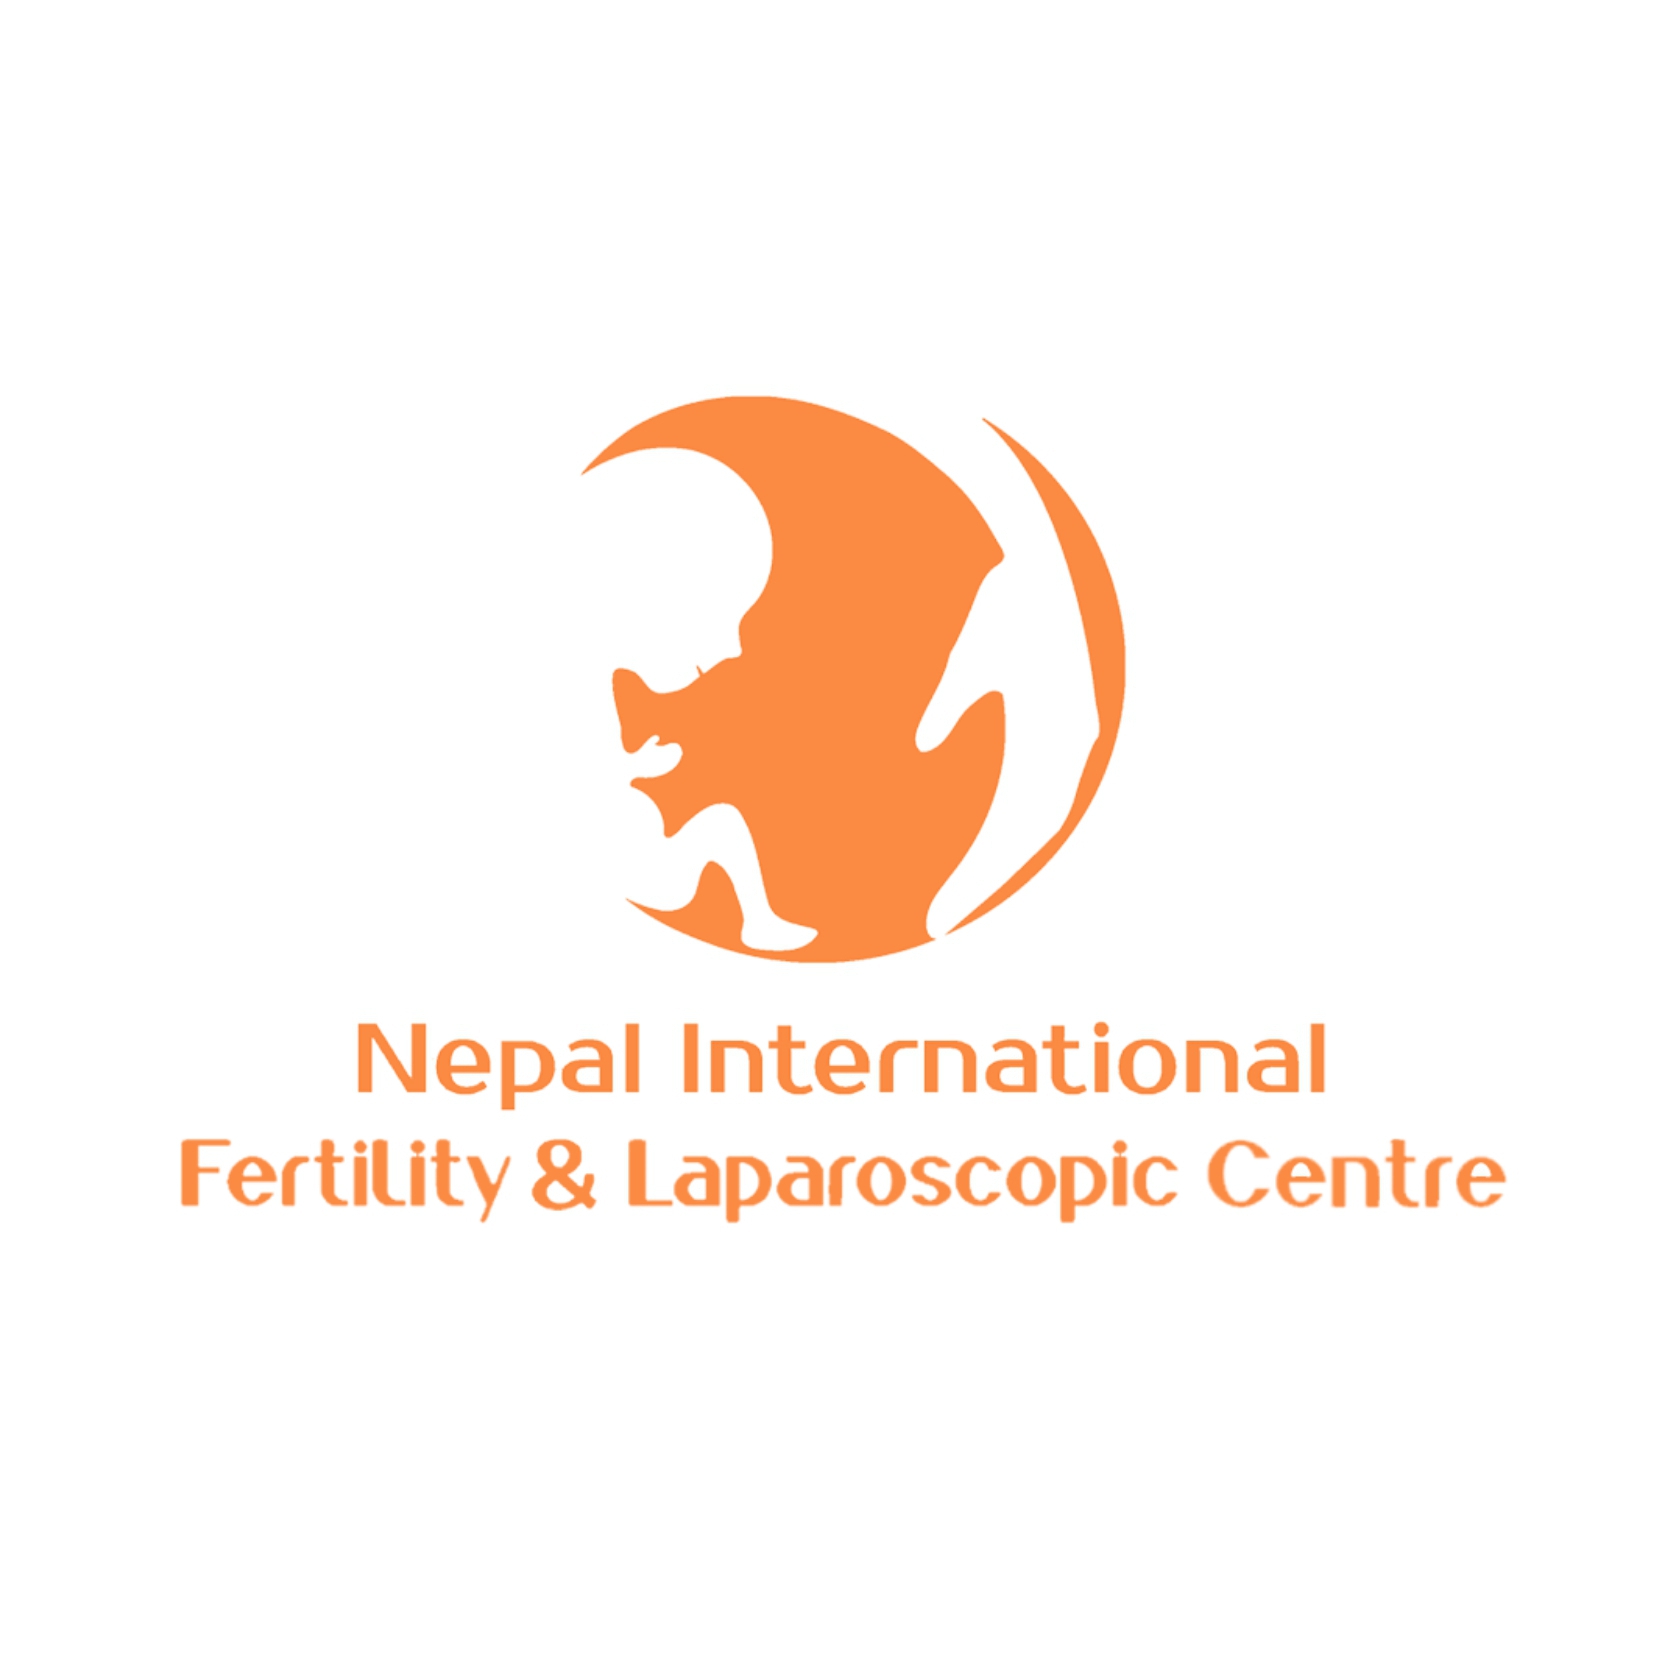 Nepal International Fertility & Laparoscopic Centre